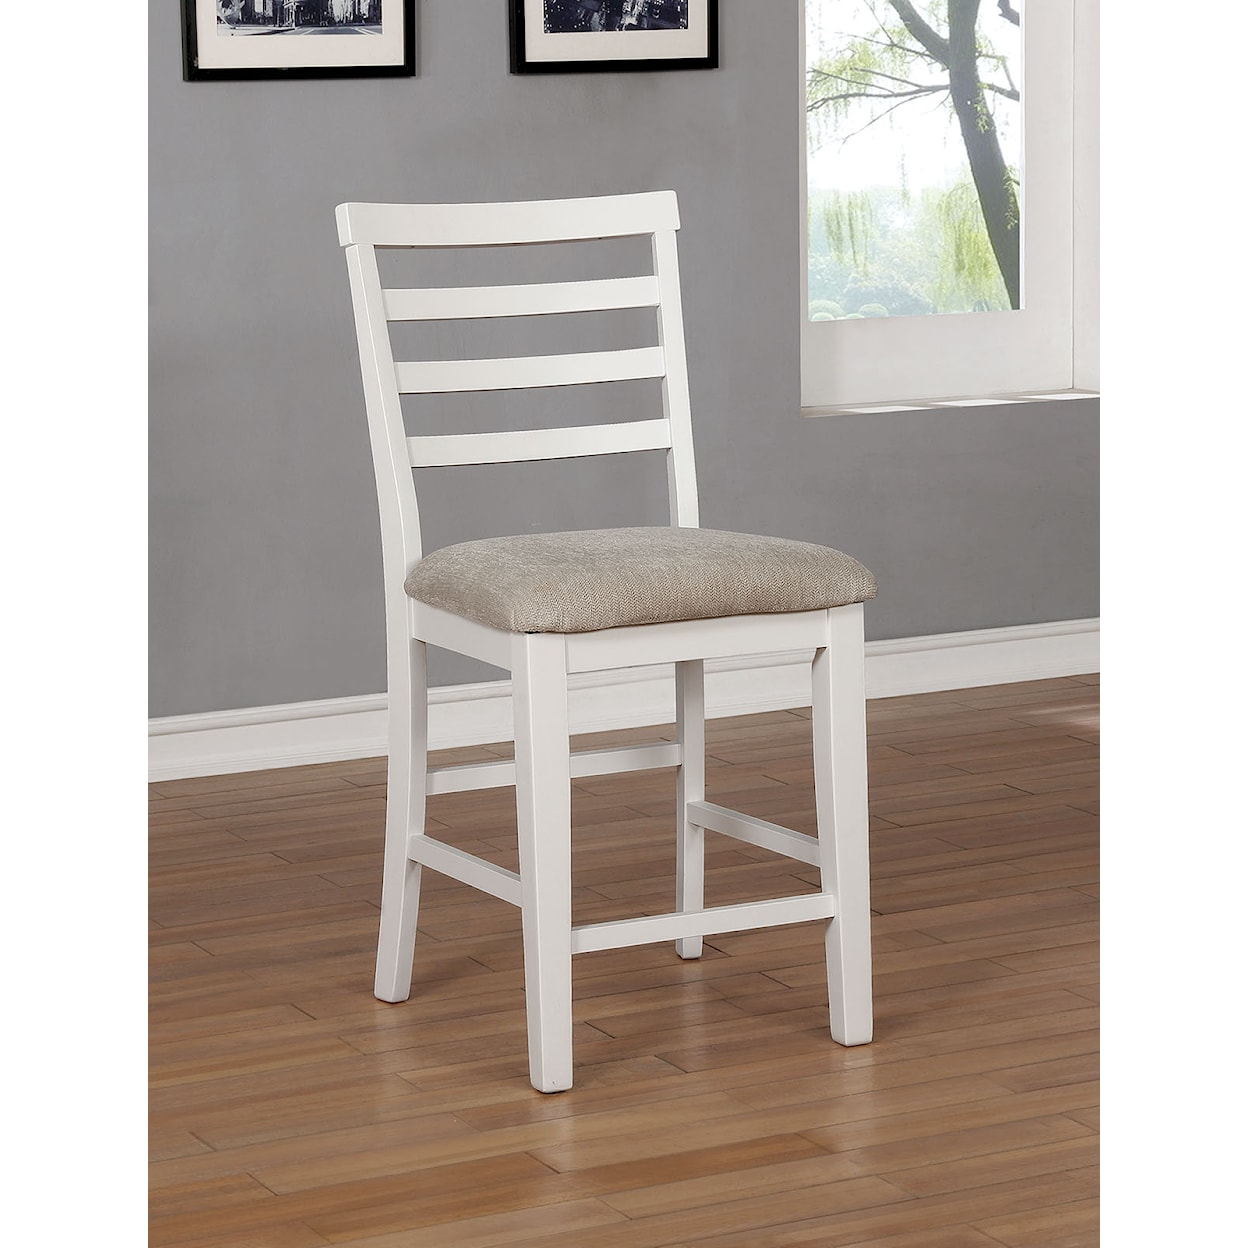 FUSA Kiana Upholstered Counter Height Side Chair